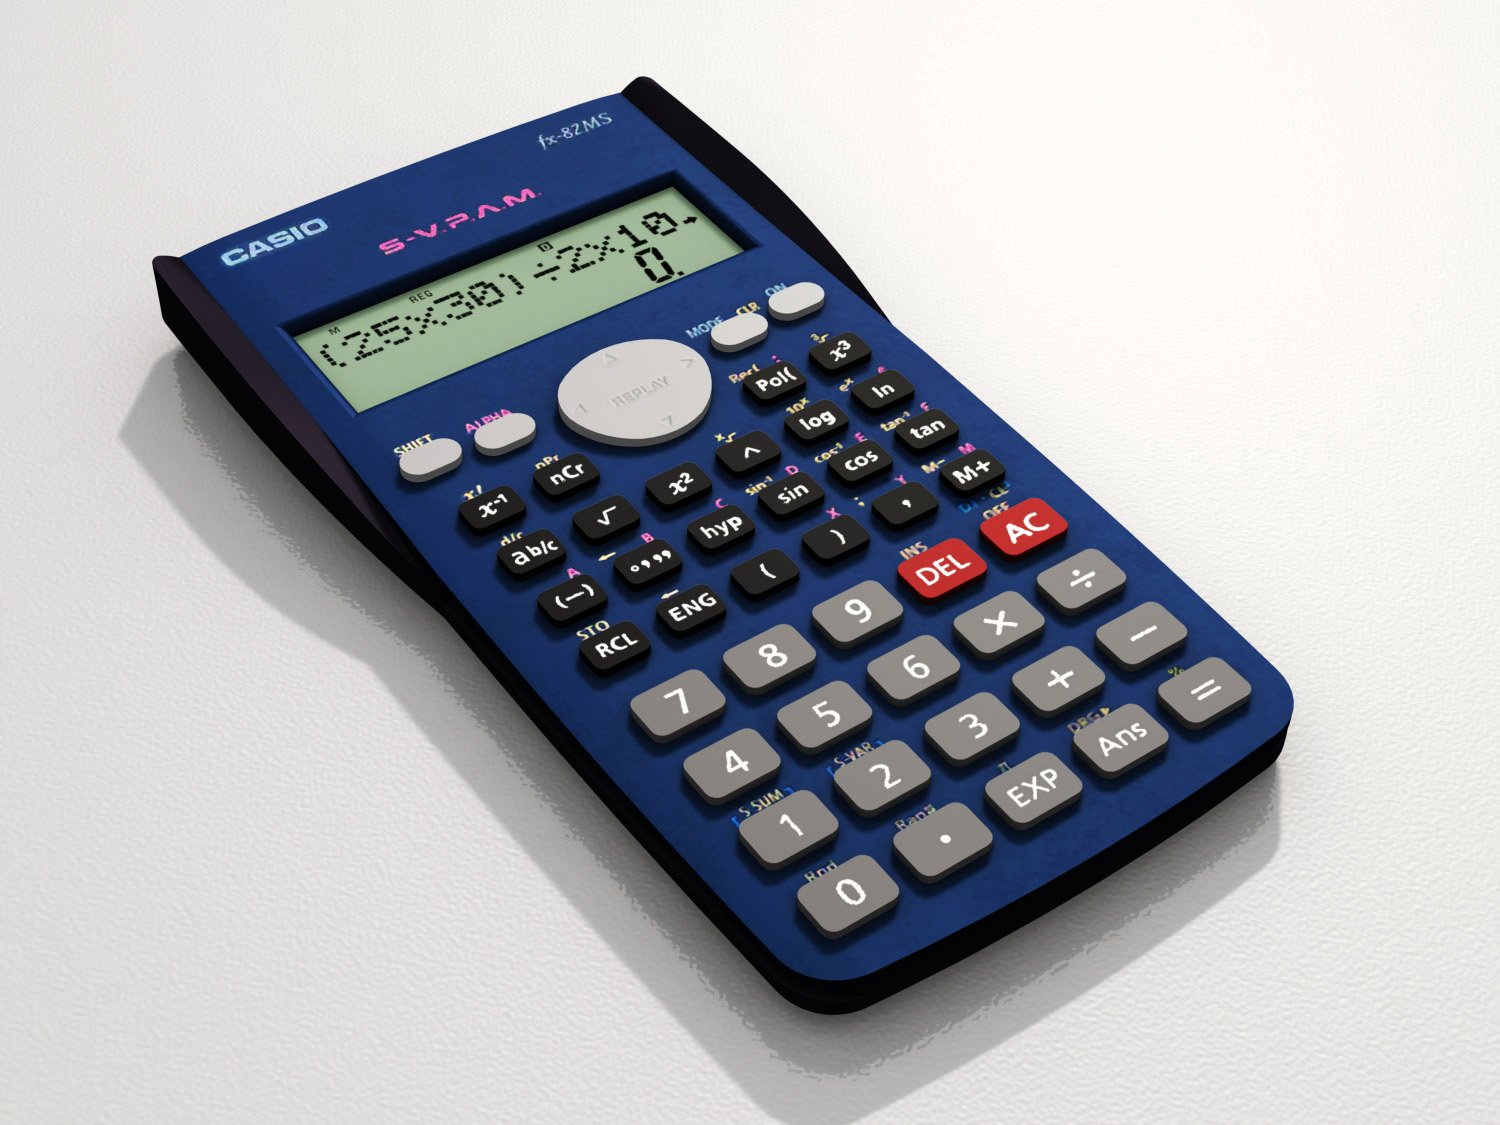 Scientific calculator. FX-82ms калькулятор.